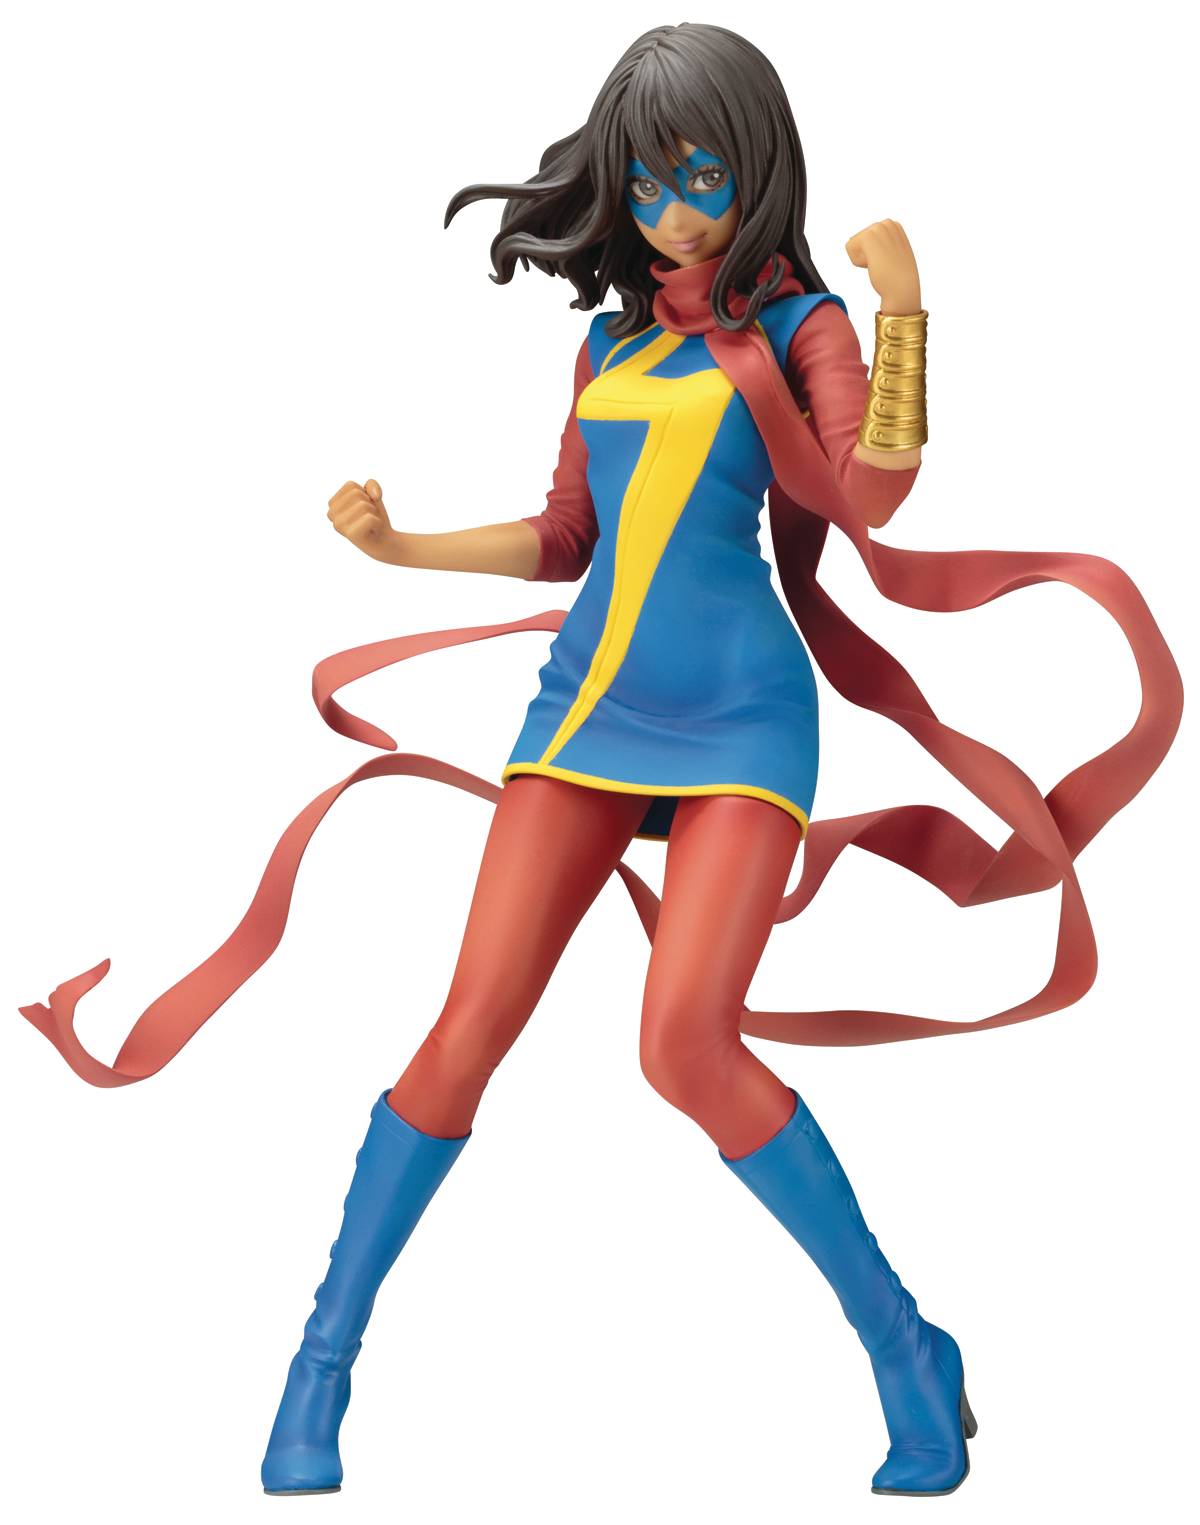 Ms. Marvel (Kamala Khan) Bishoujo Stataue